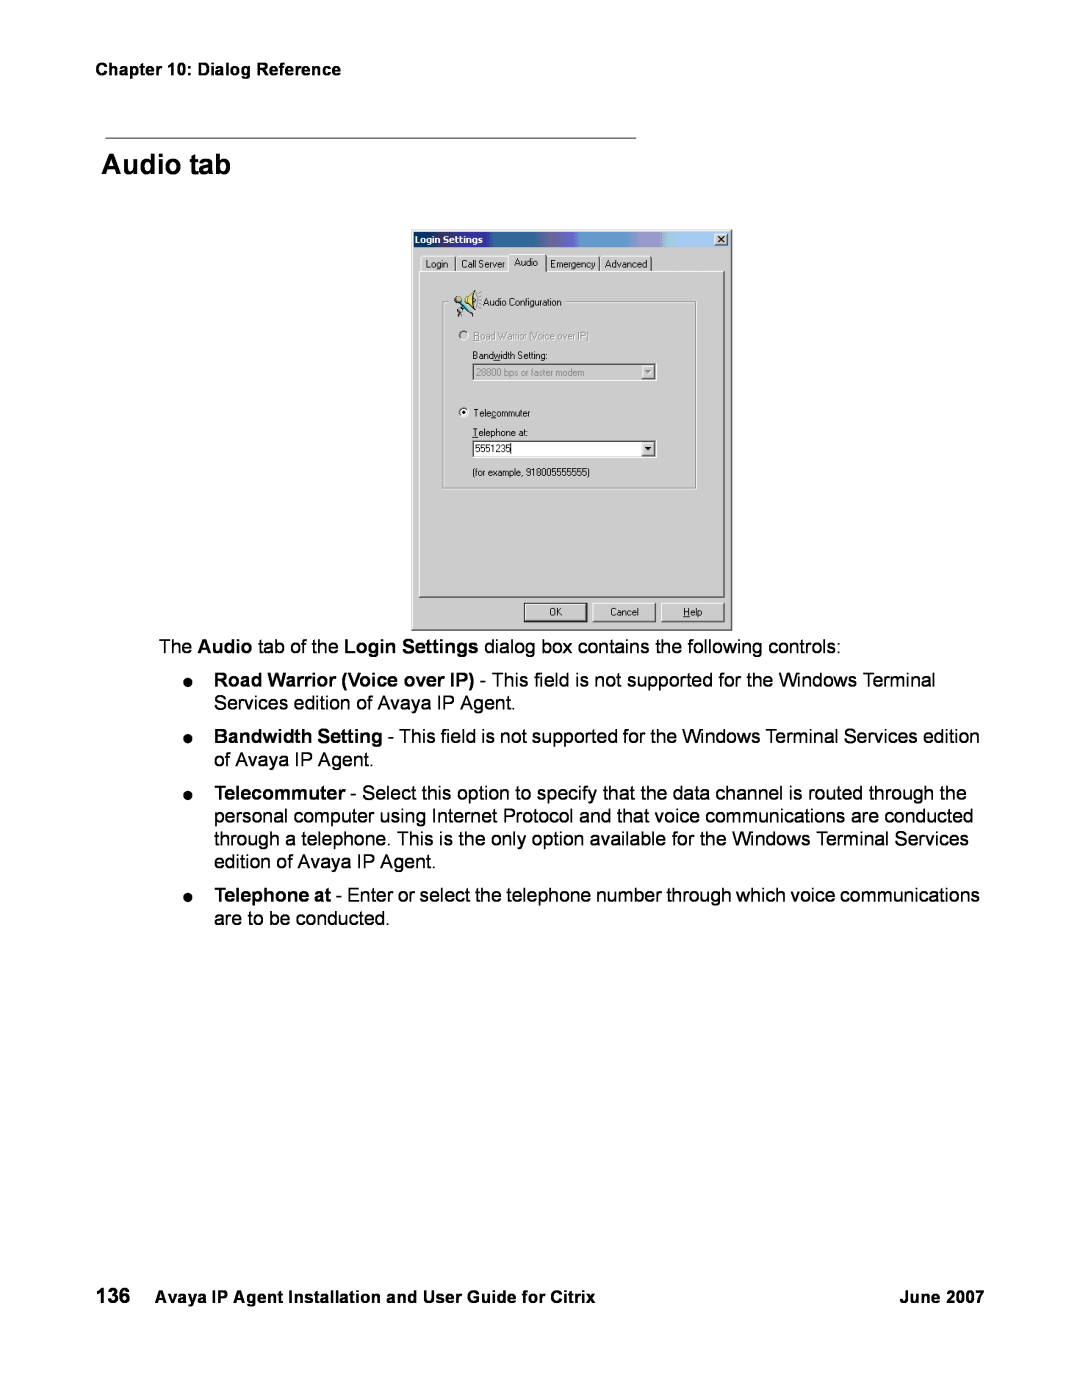 Avaya 7 manual Audio tab 